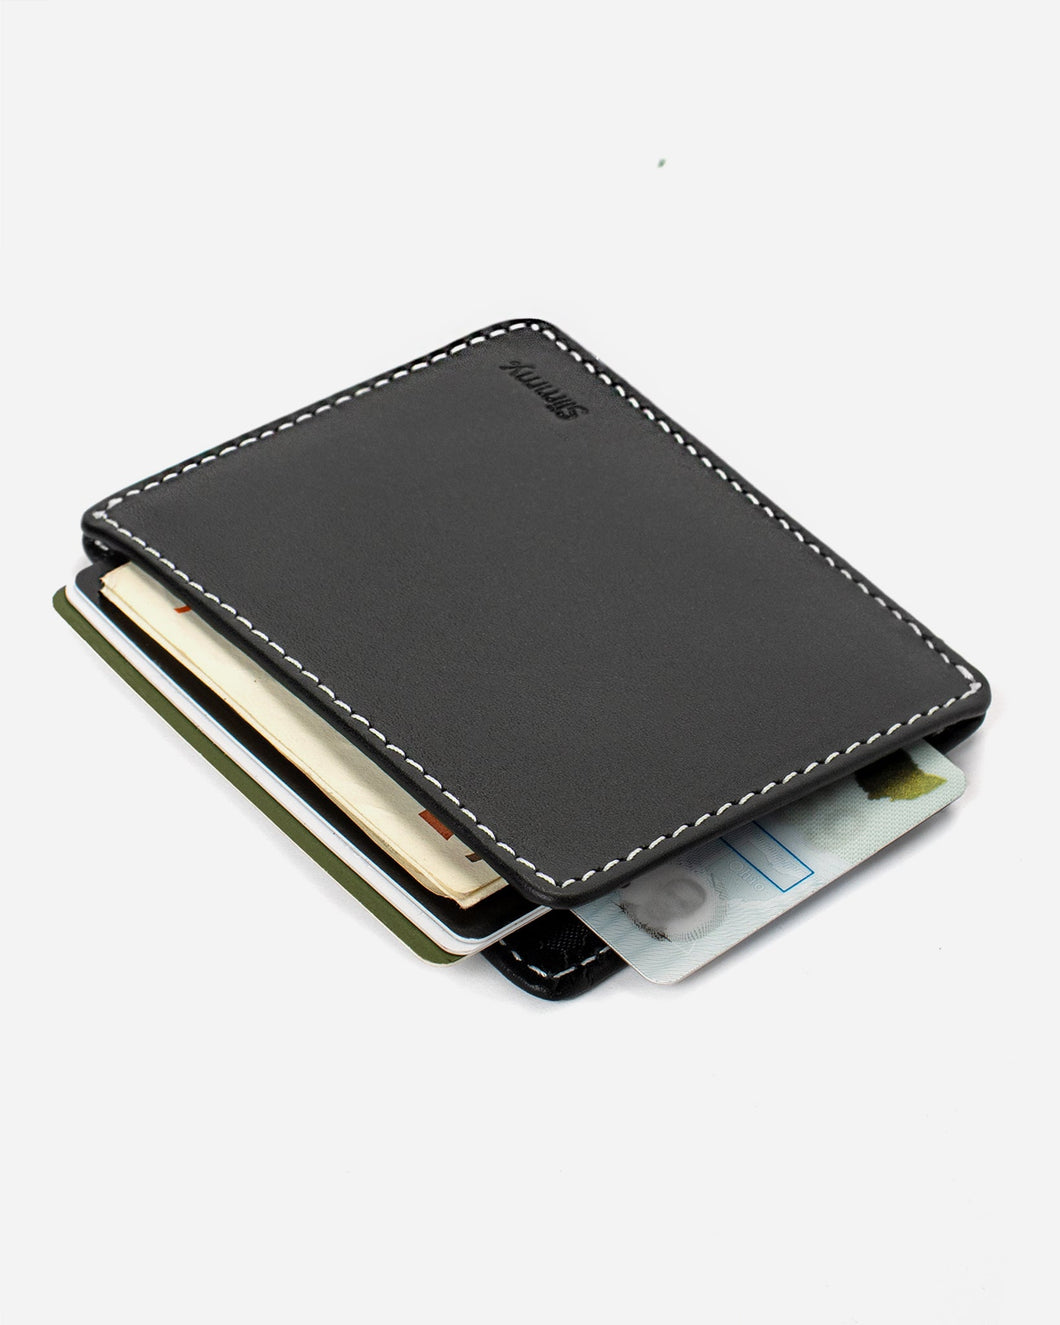 R1S2 1 Pocket 2 Slot Wallet (83mm) - Black